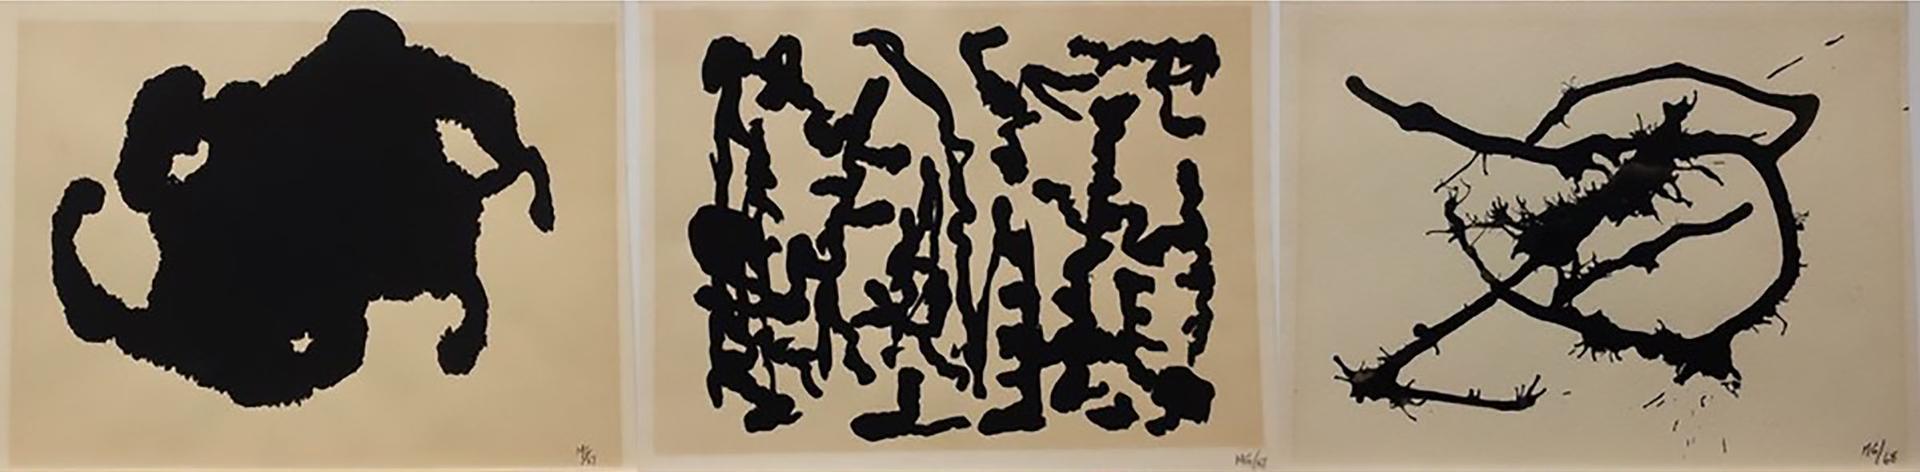 Cawthra Mulock (1915-1998) - Abstracts